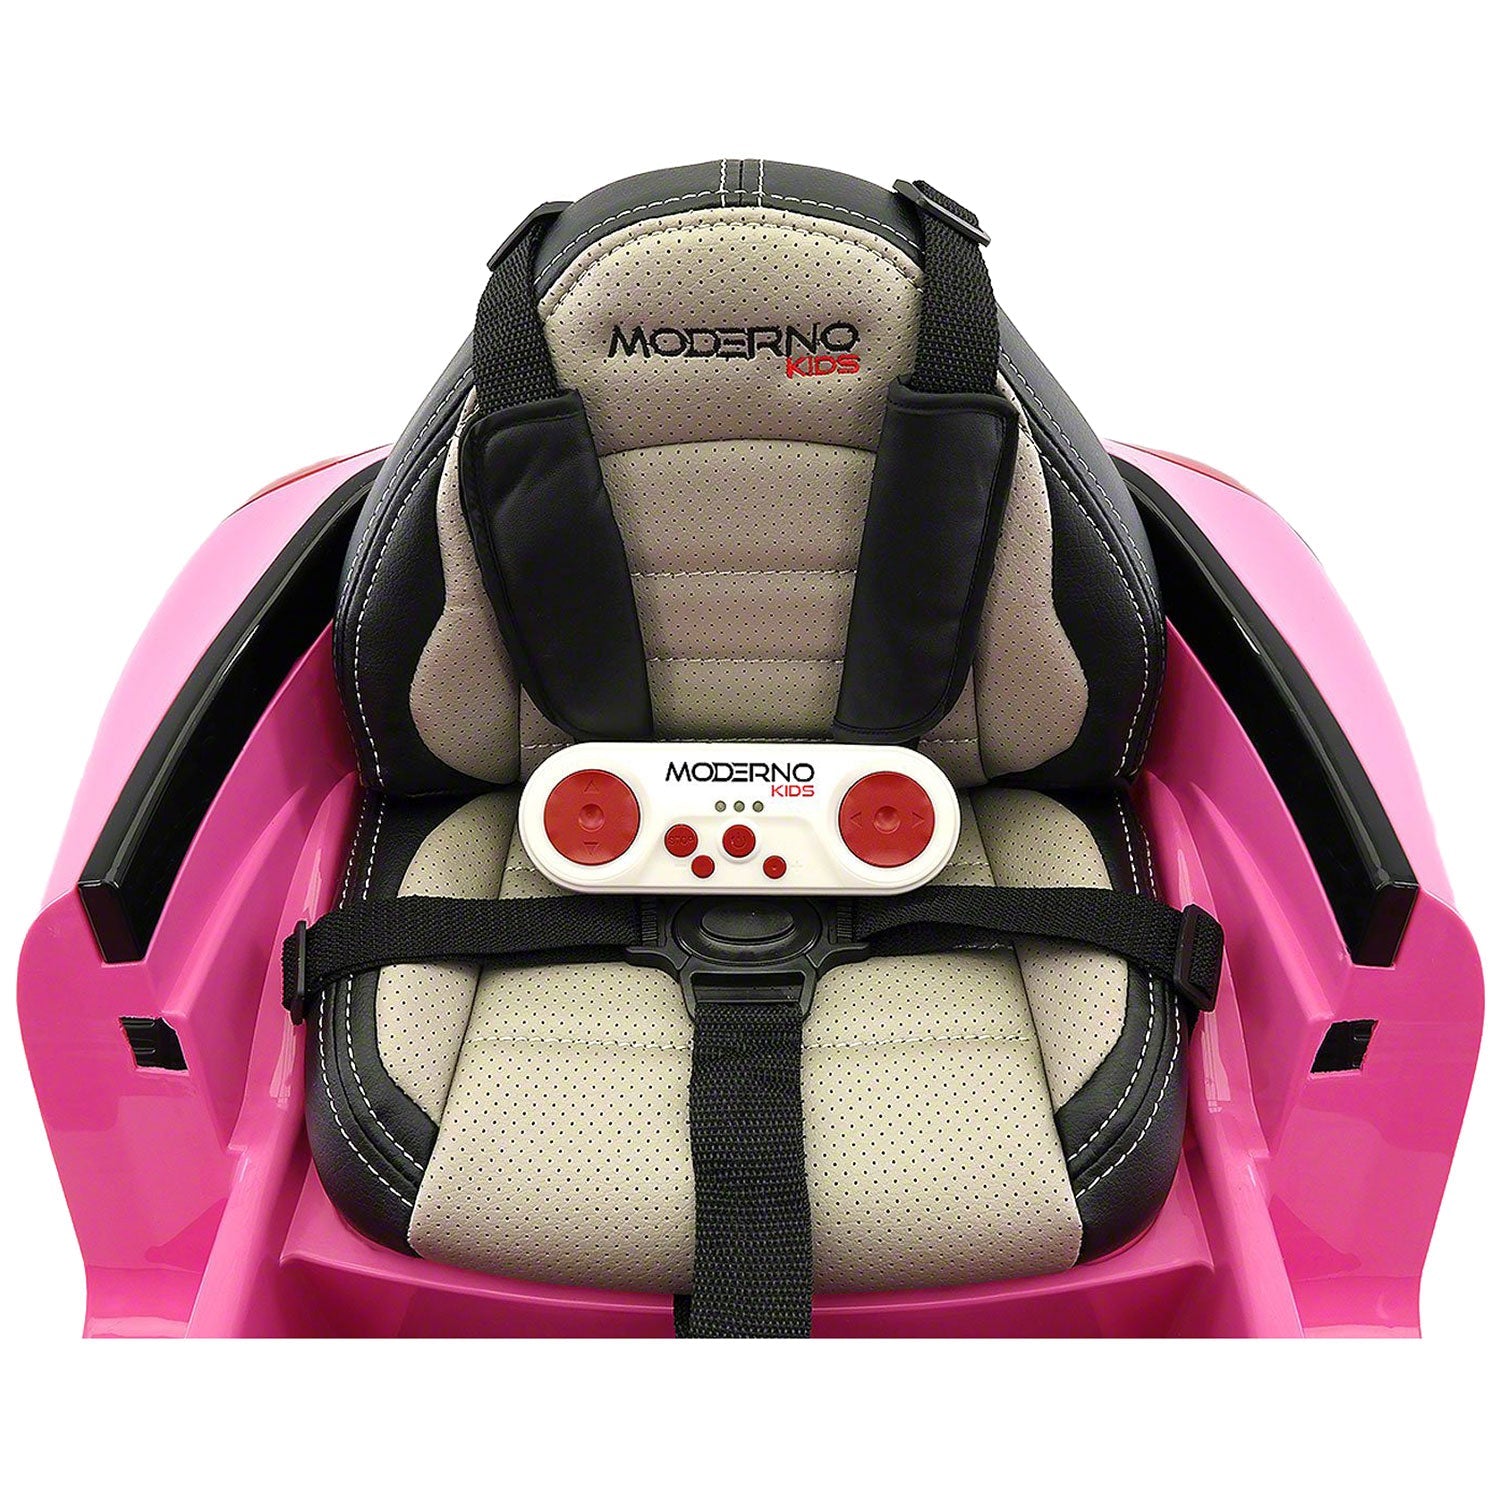 Kiddie Roadster 12v Kids Electric Ride-on Car With R/c Parental Remote | Pink